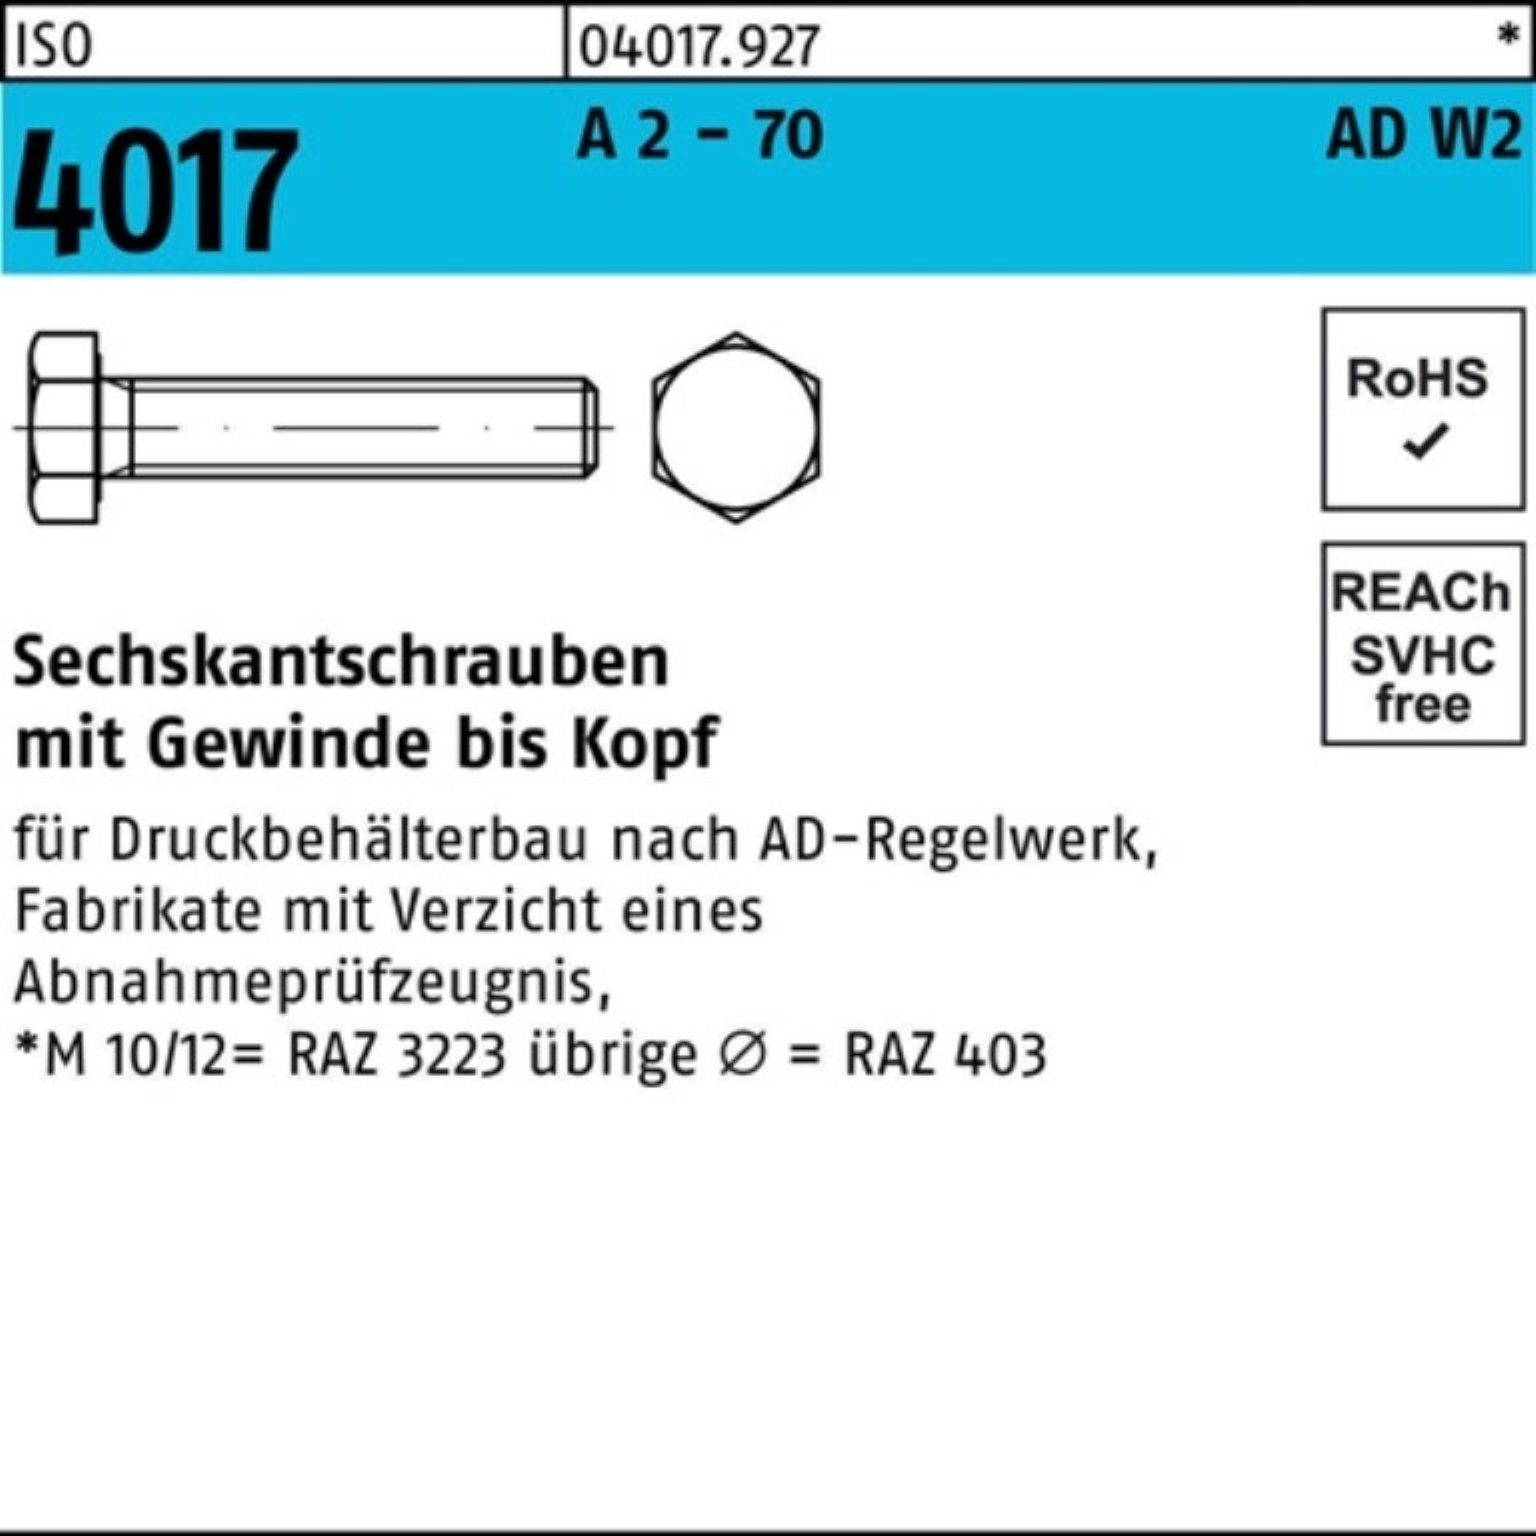 Bufab Sechskantschraube 100er Pack Sechskantschraube ISO 4017 VG M12x 65 A 2 - 70 AD-W2 50 St